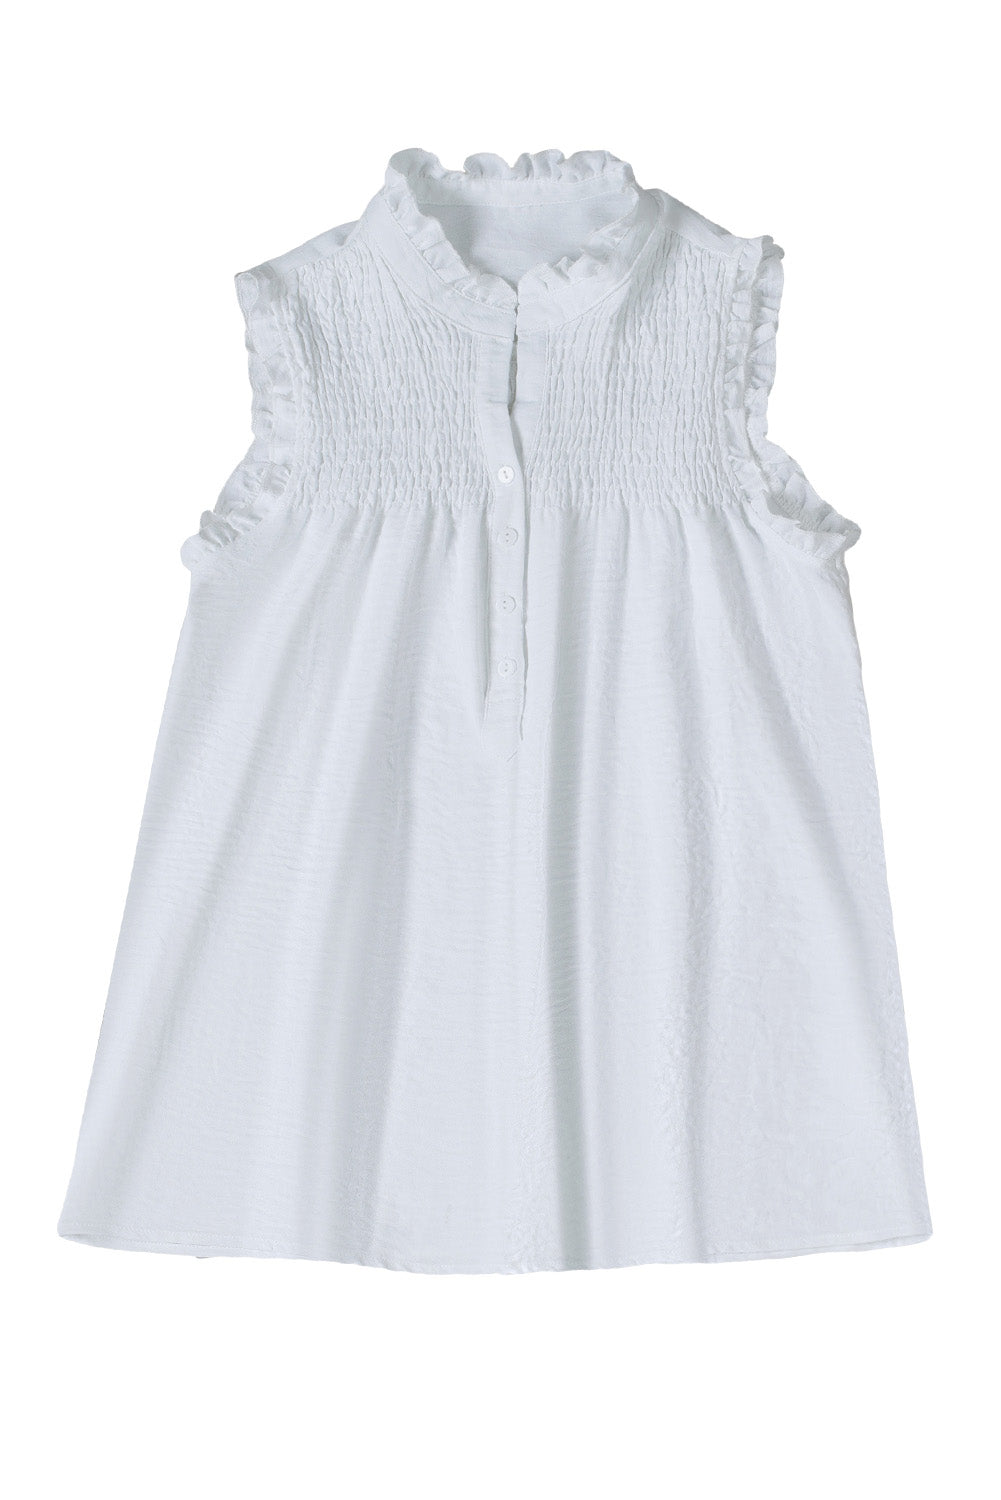 White Smocked Button Front V Neck Sleeveless Shirt